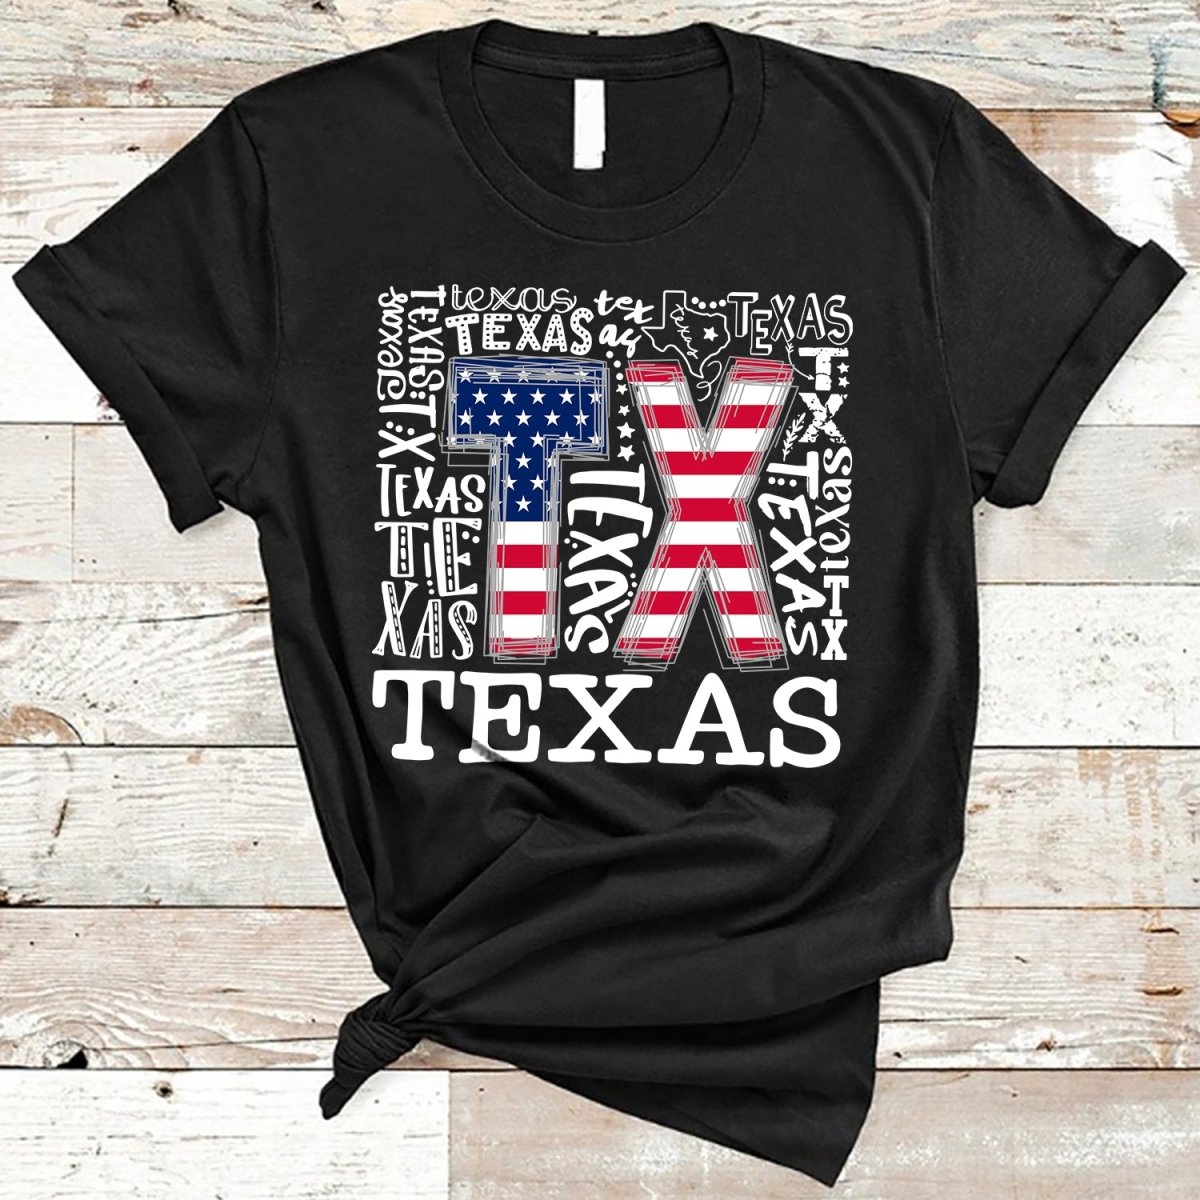 Texas TX America T-Shirt - TG0622HN